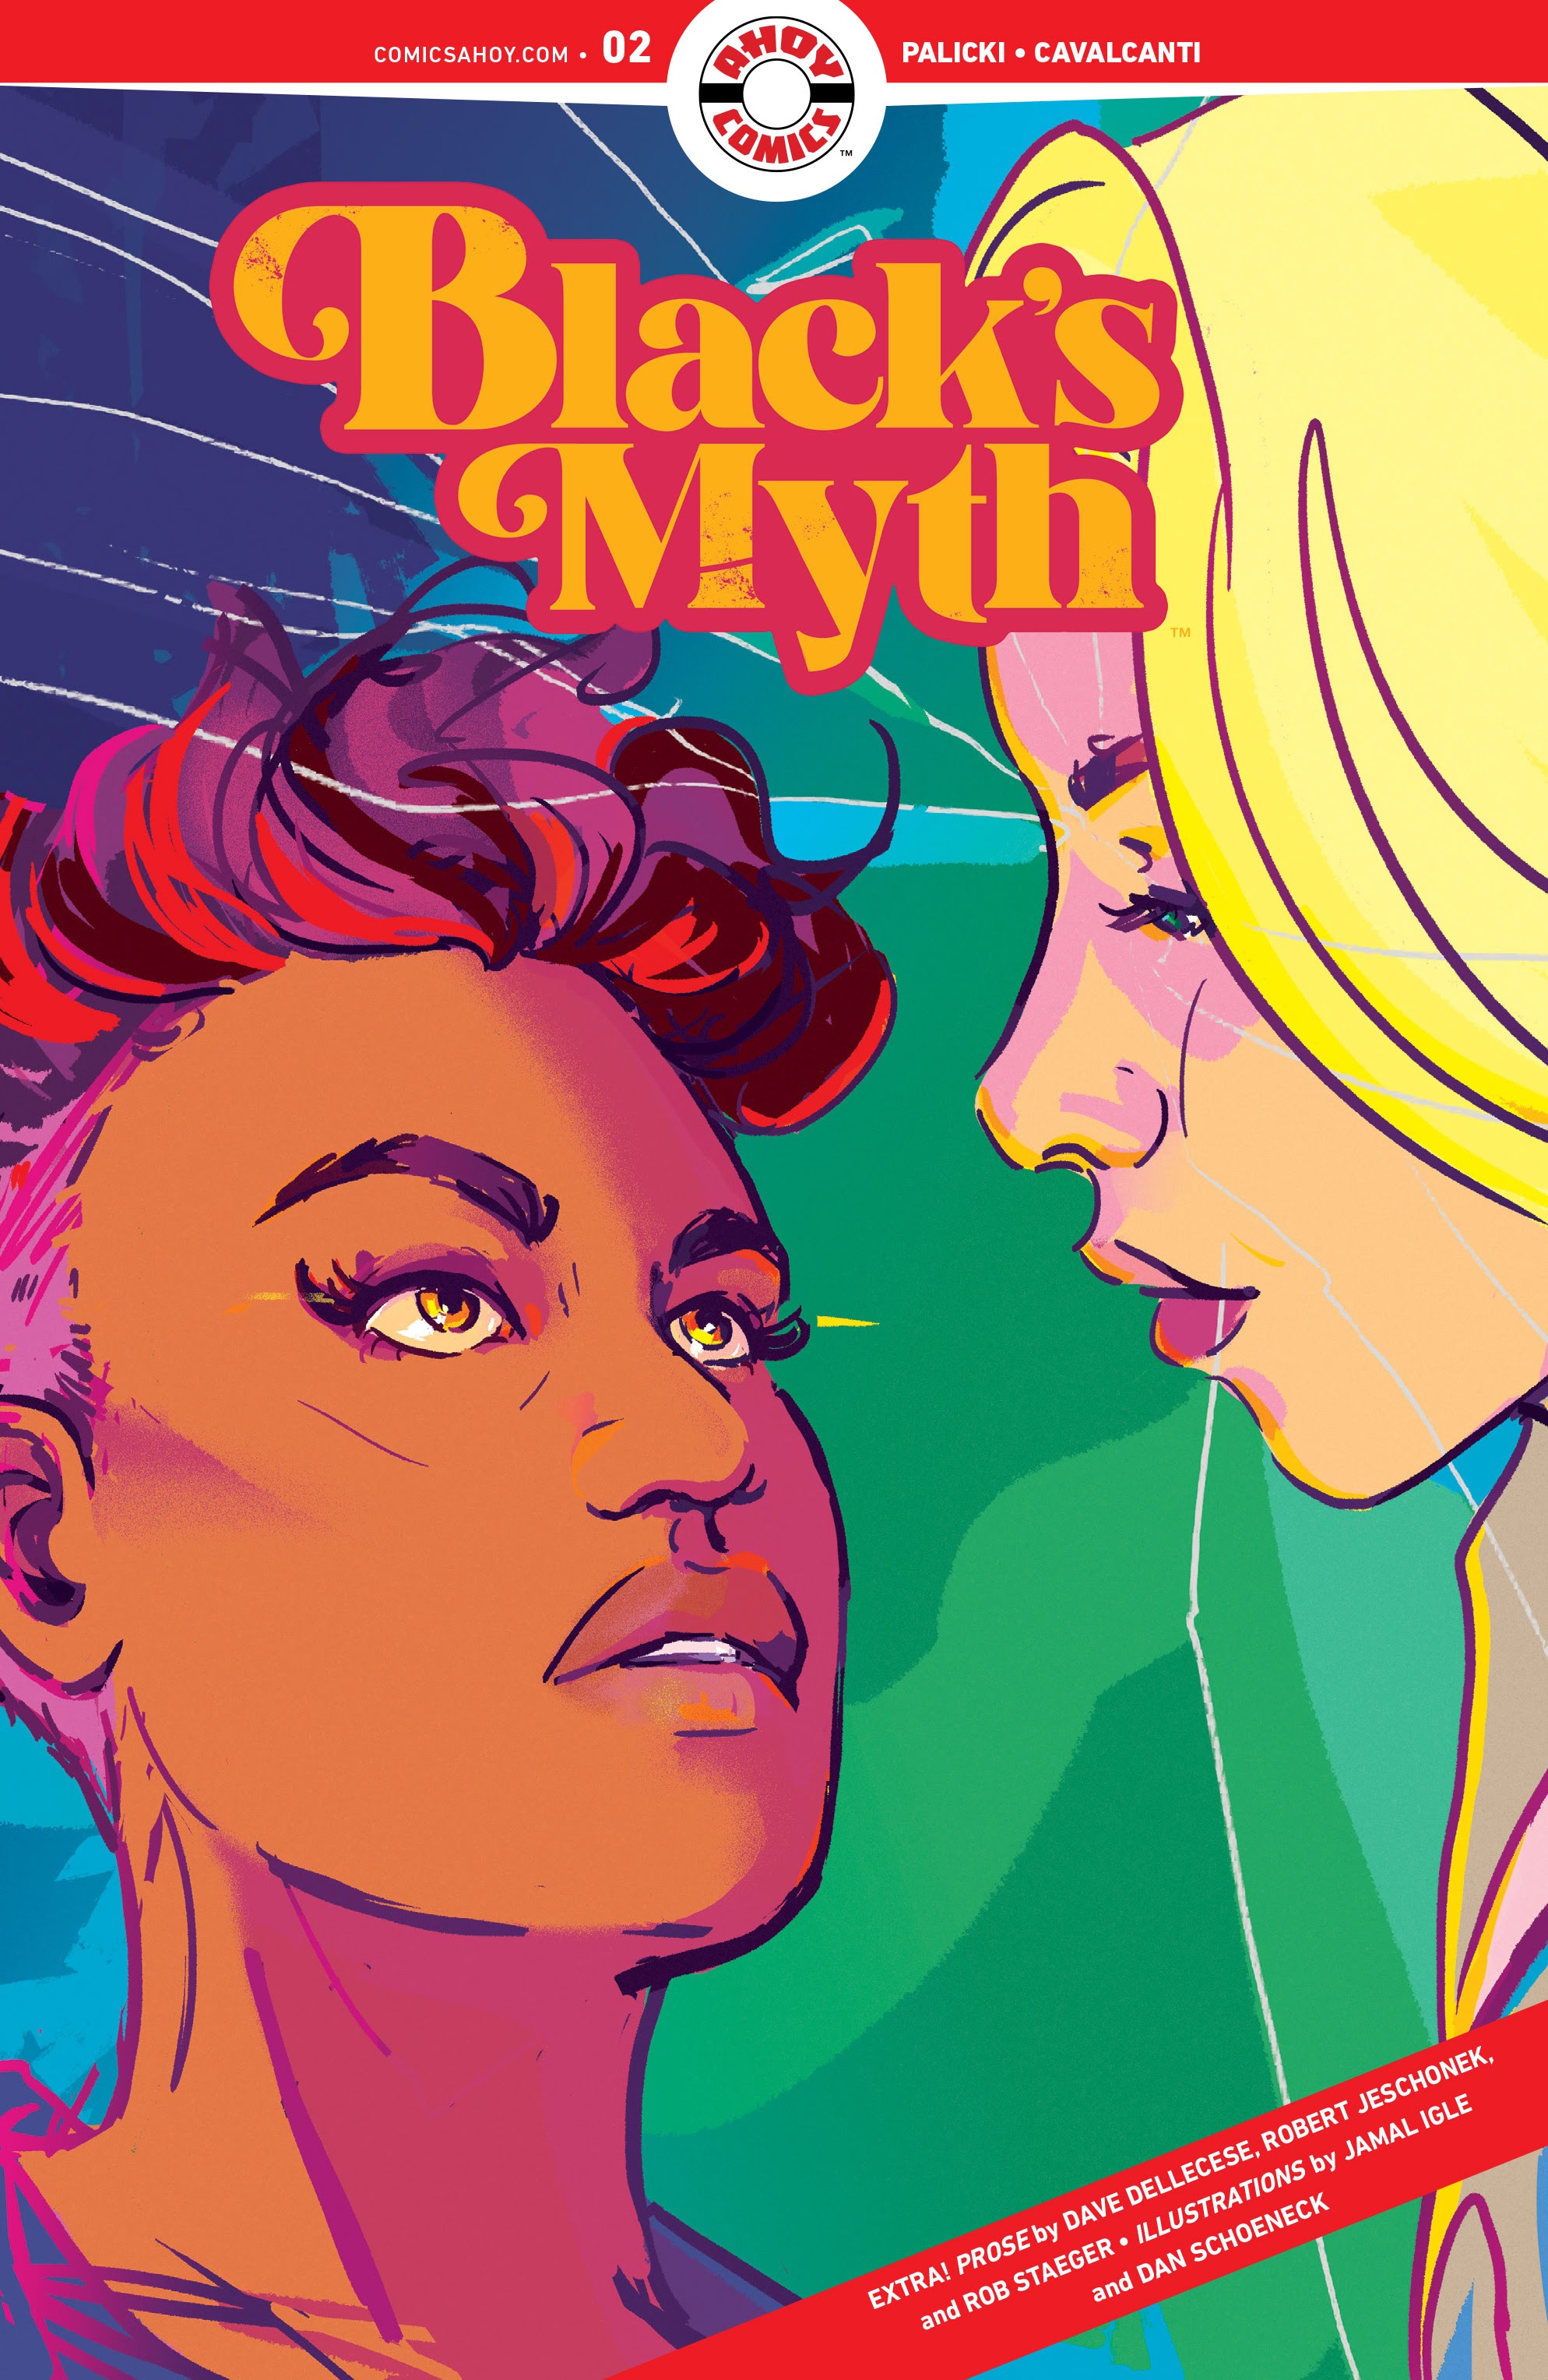 Read online Black's Myth comic -  Issue #2 - 1